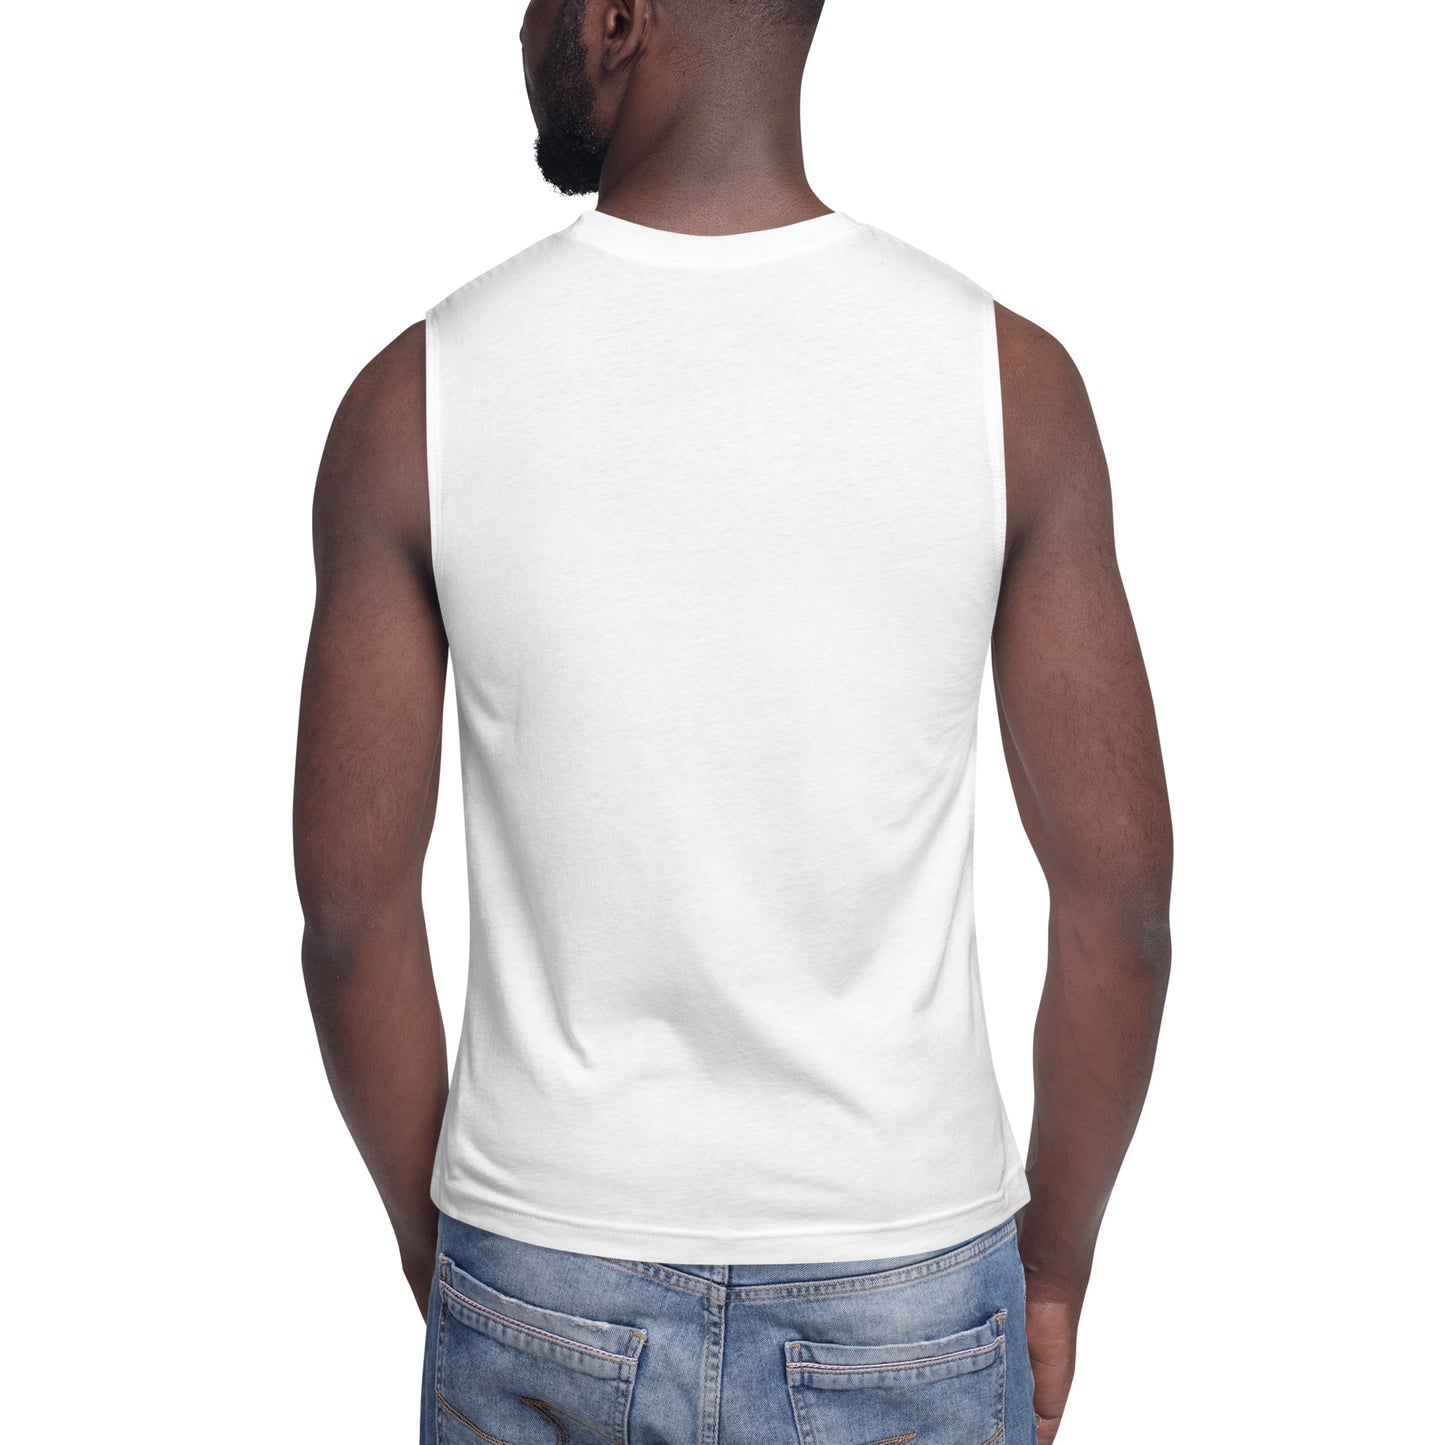 DESIGNER Muscle Shirt